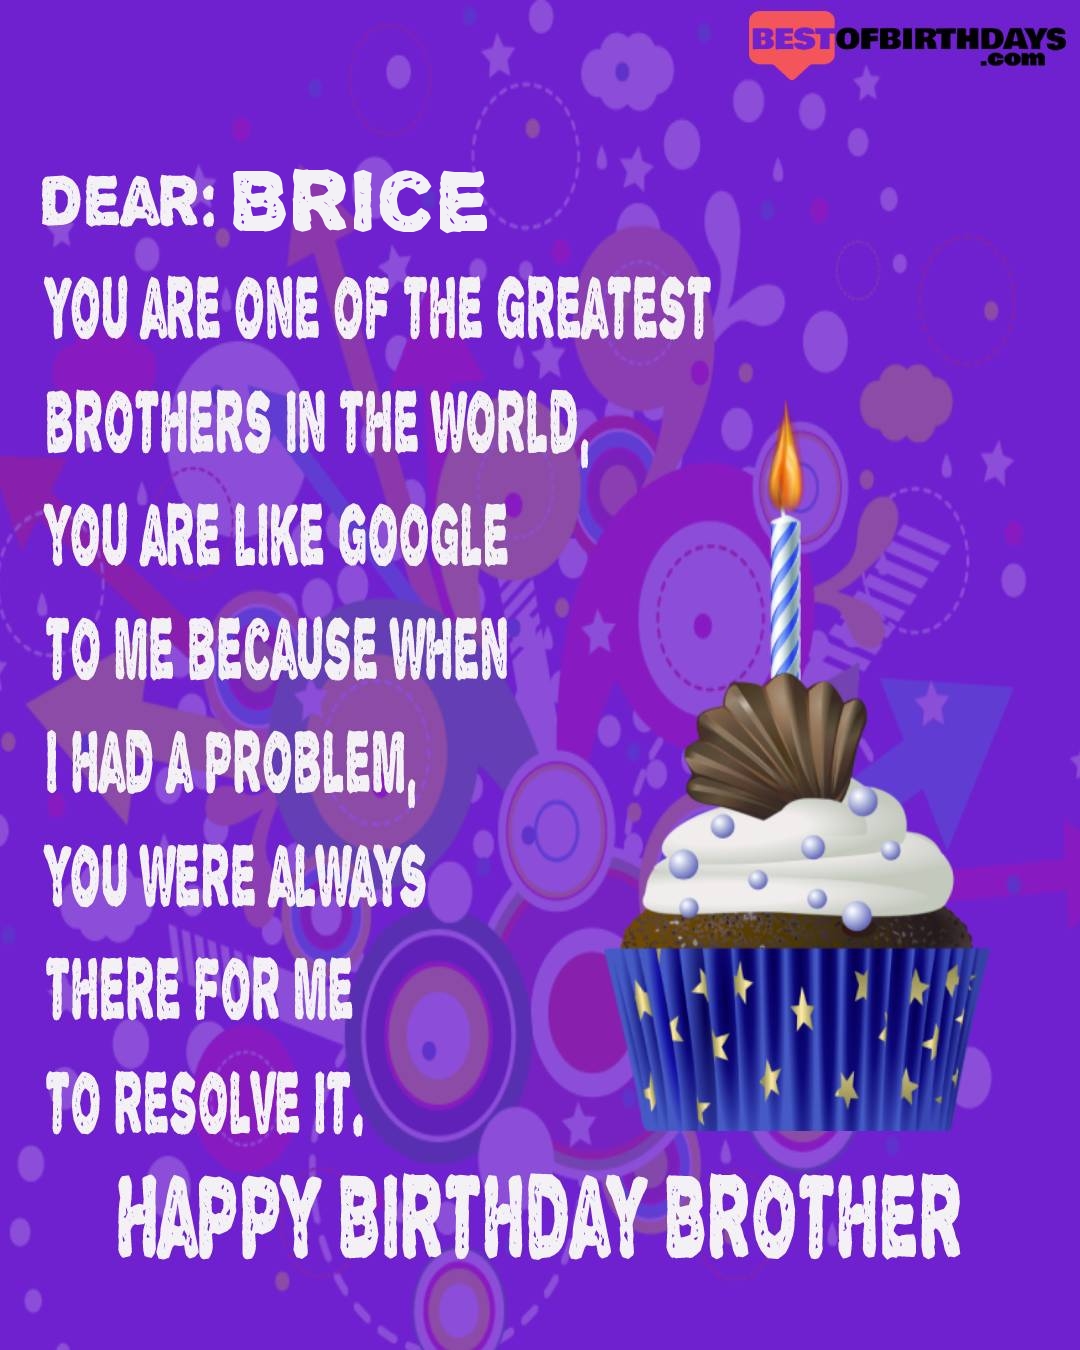 Happy birthday brice bhai brother bro